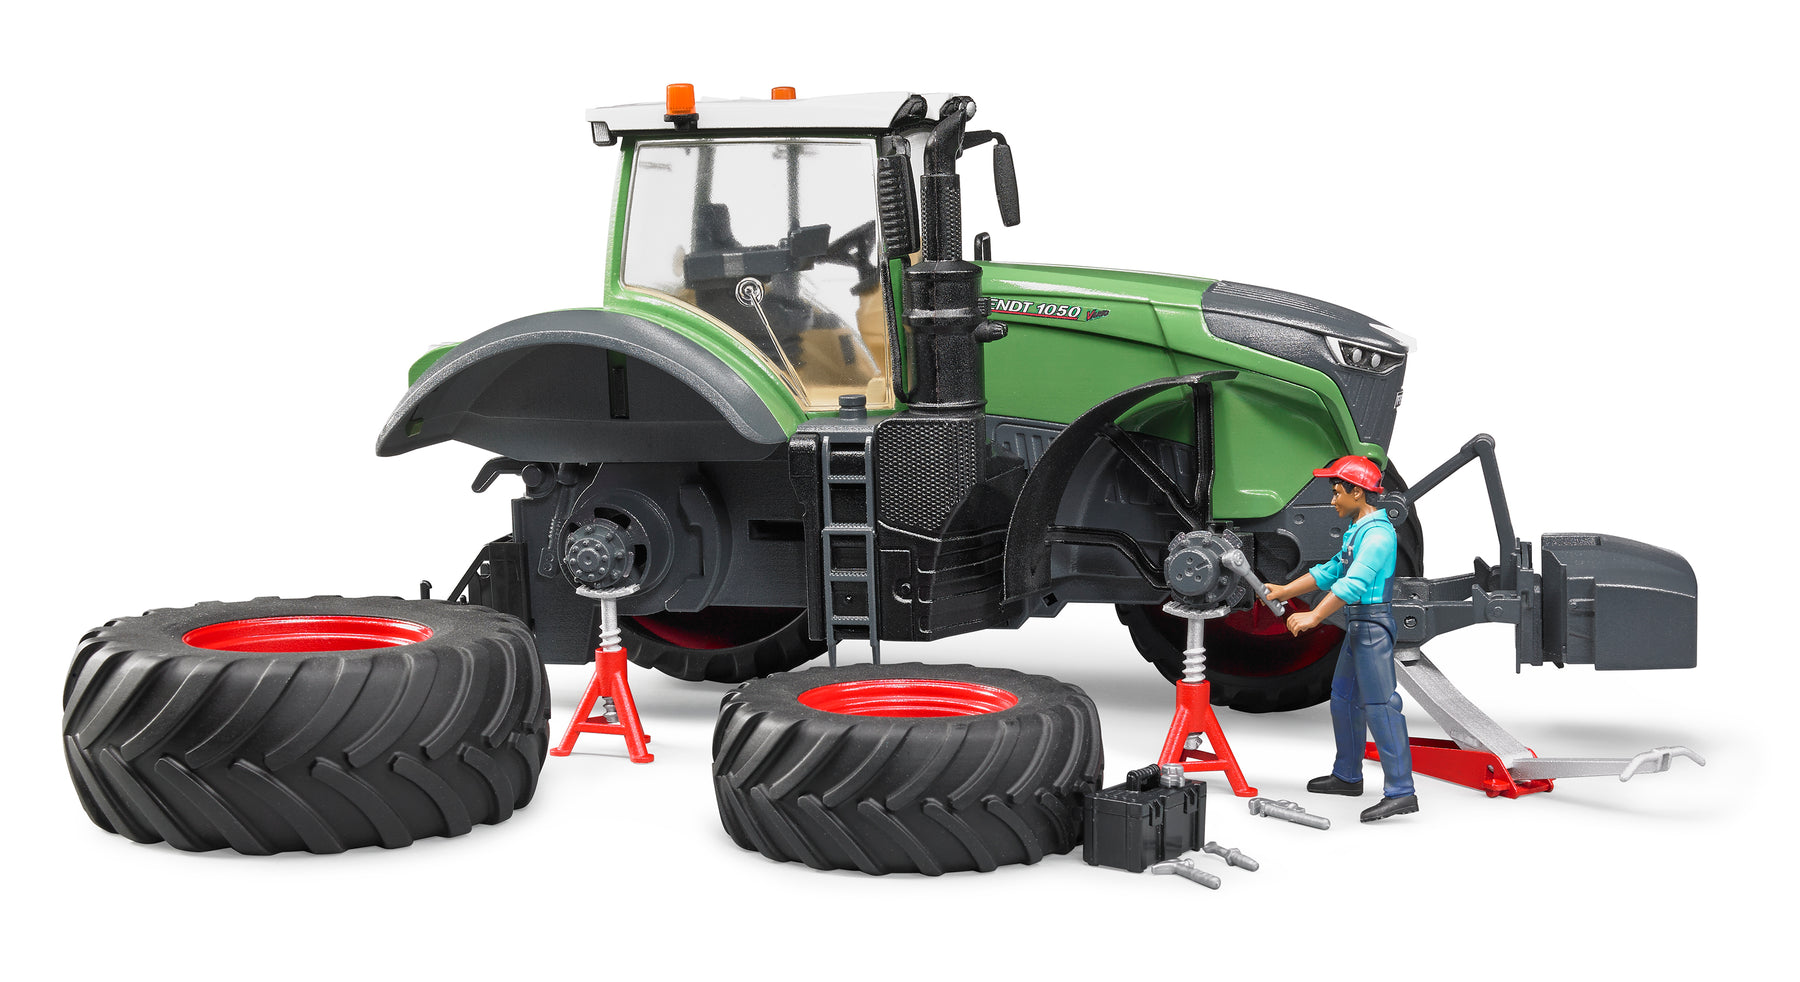 Bruder 04041 Fendt 1000 Tractor w/ Repair Accessories 18.10.10 – Bruder Toy